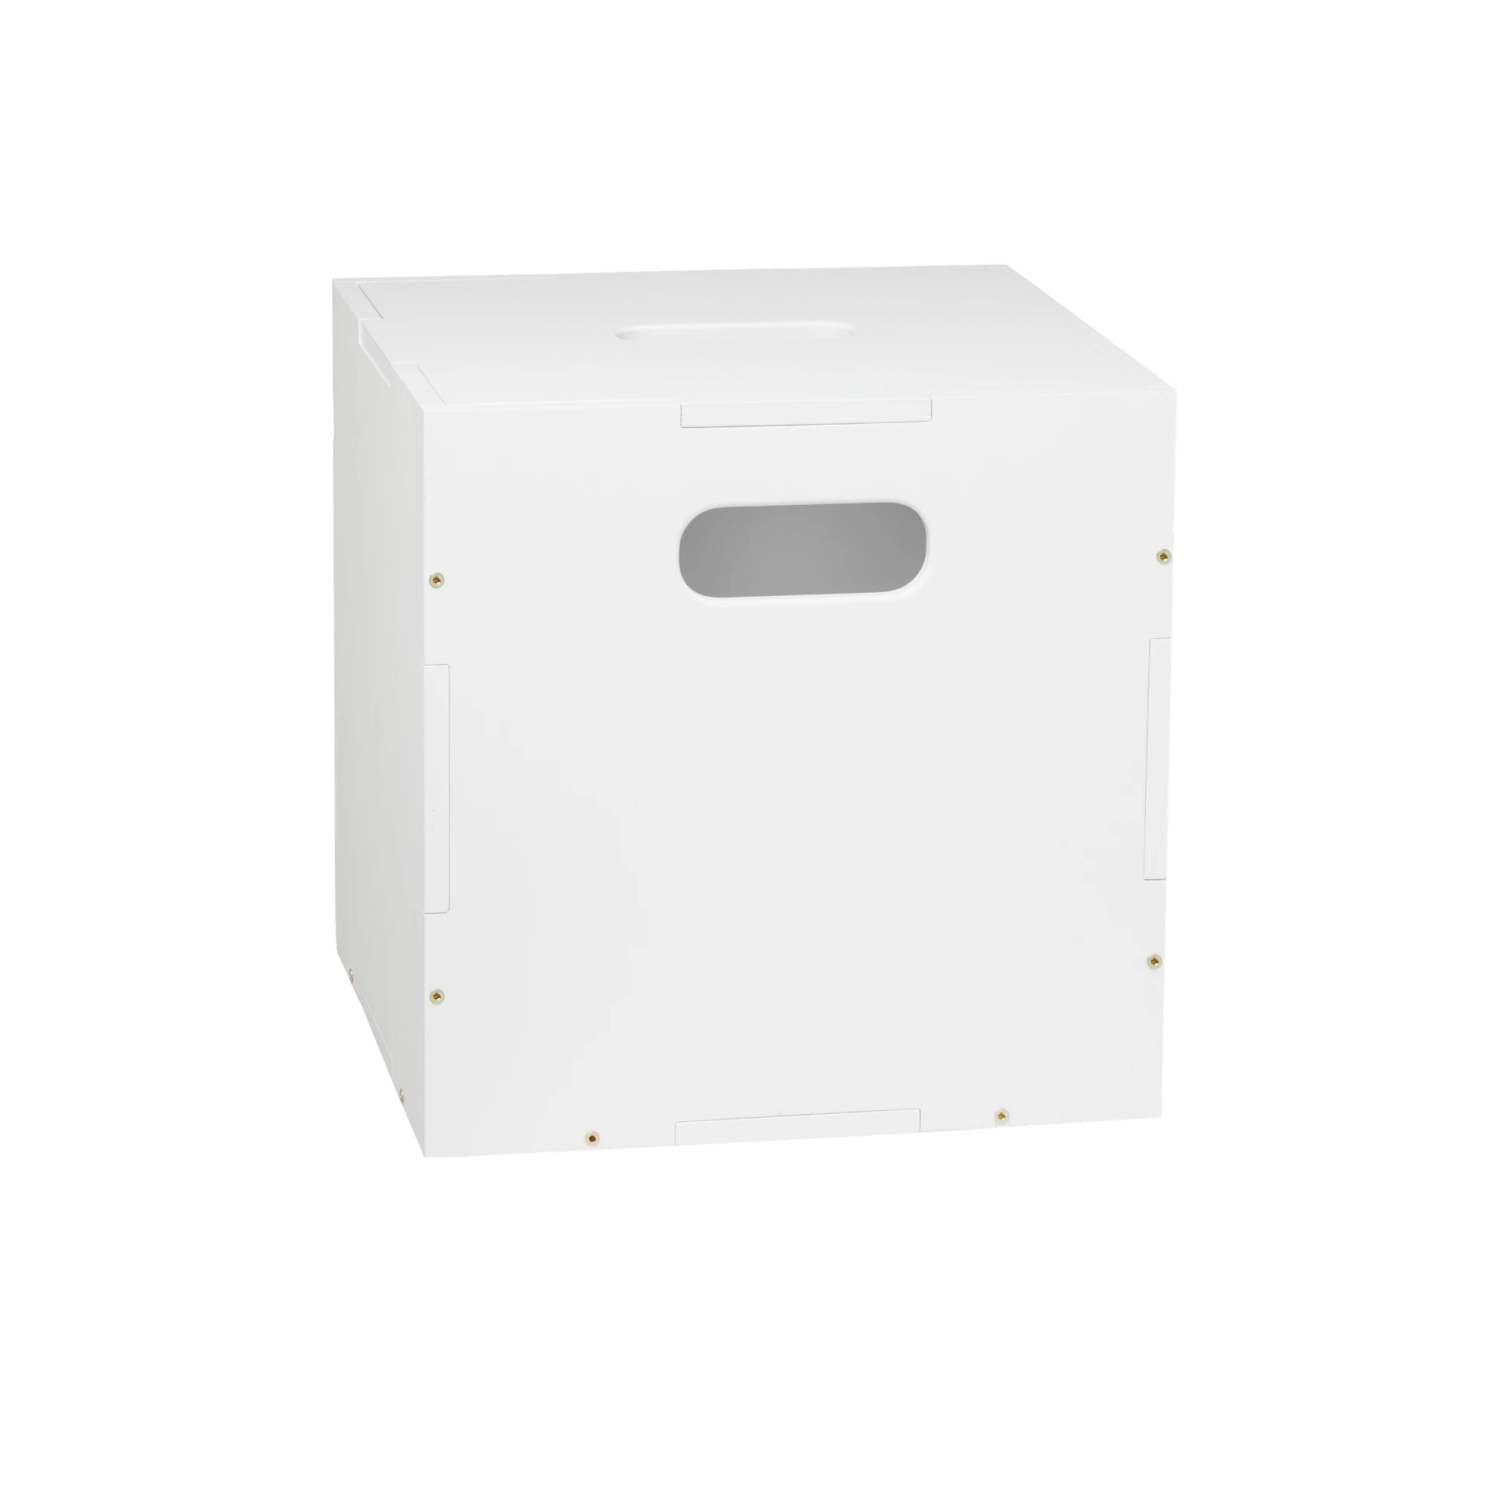 Förvaringslåda Cube Storage vit Nofred